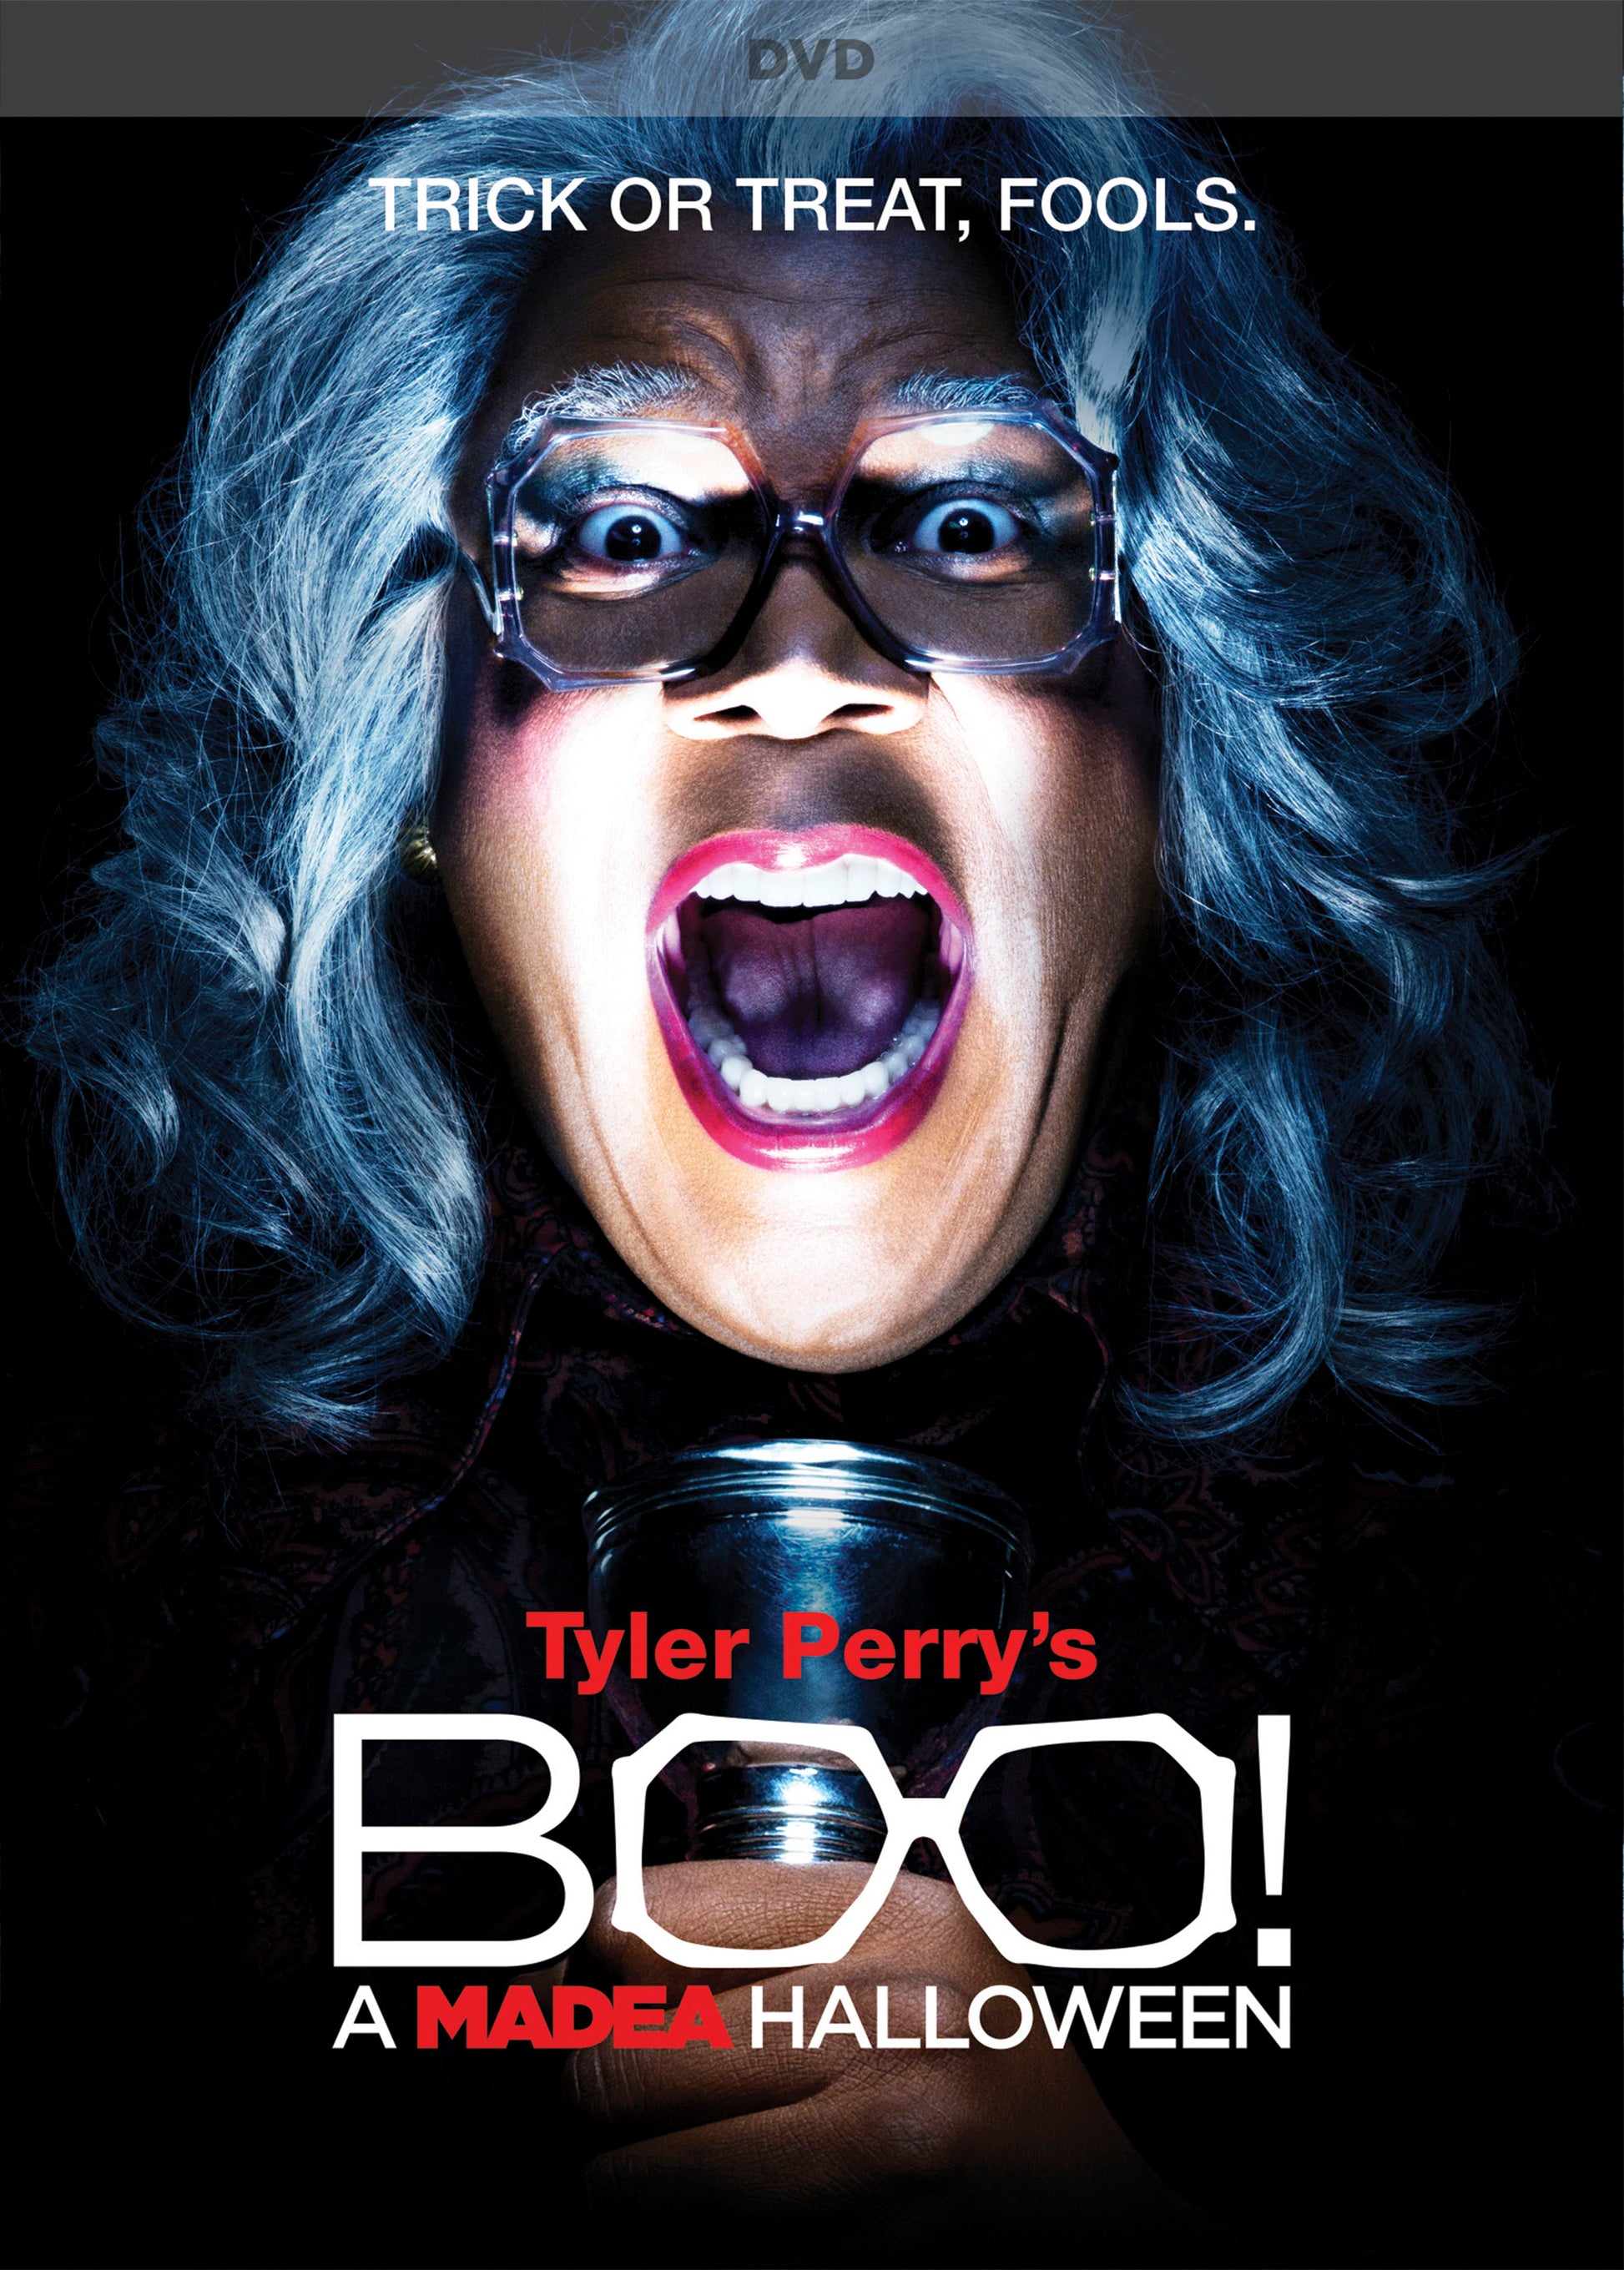 Tyler Perry's Boo! A Madea Halloween cover art